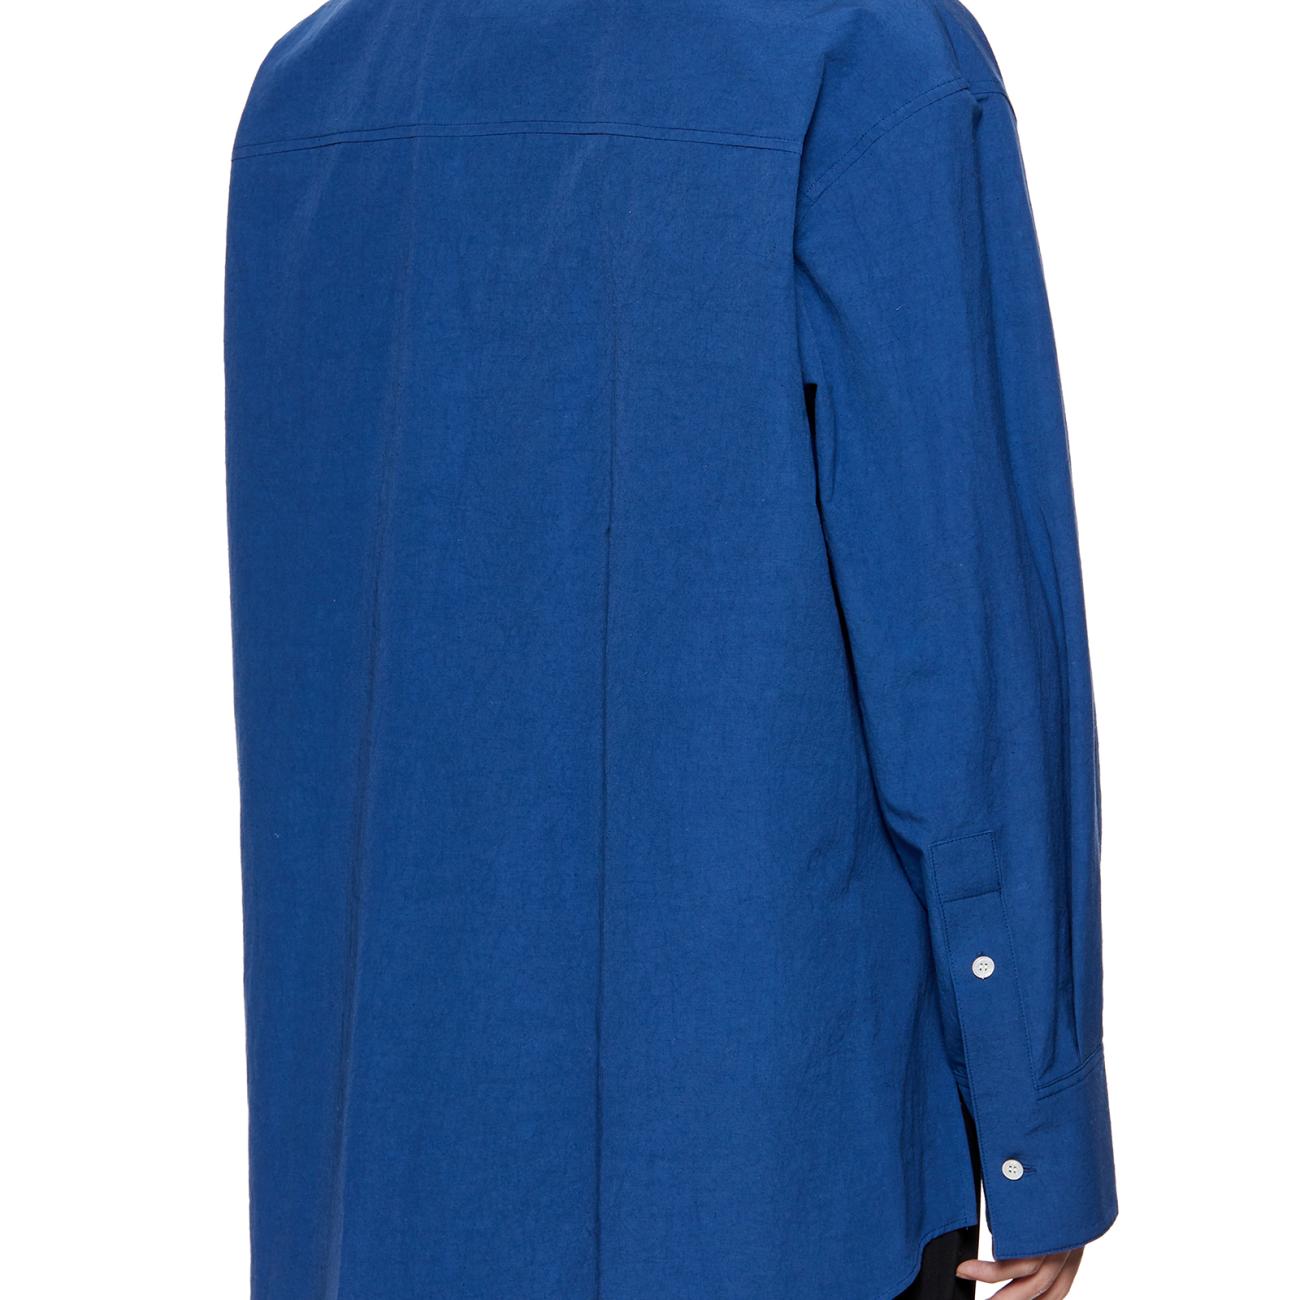 Blue hemp layered shirt